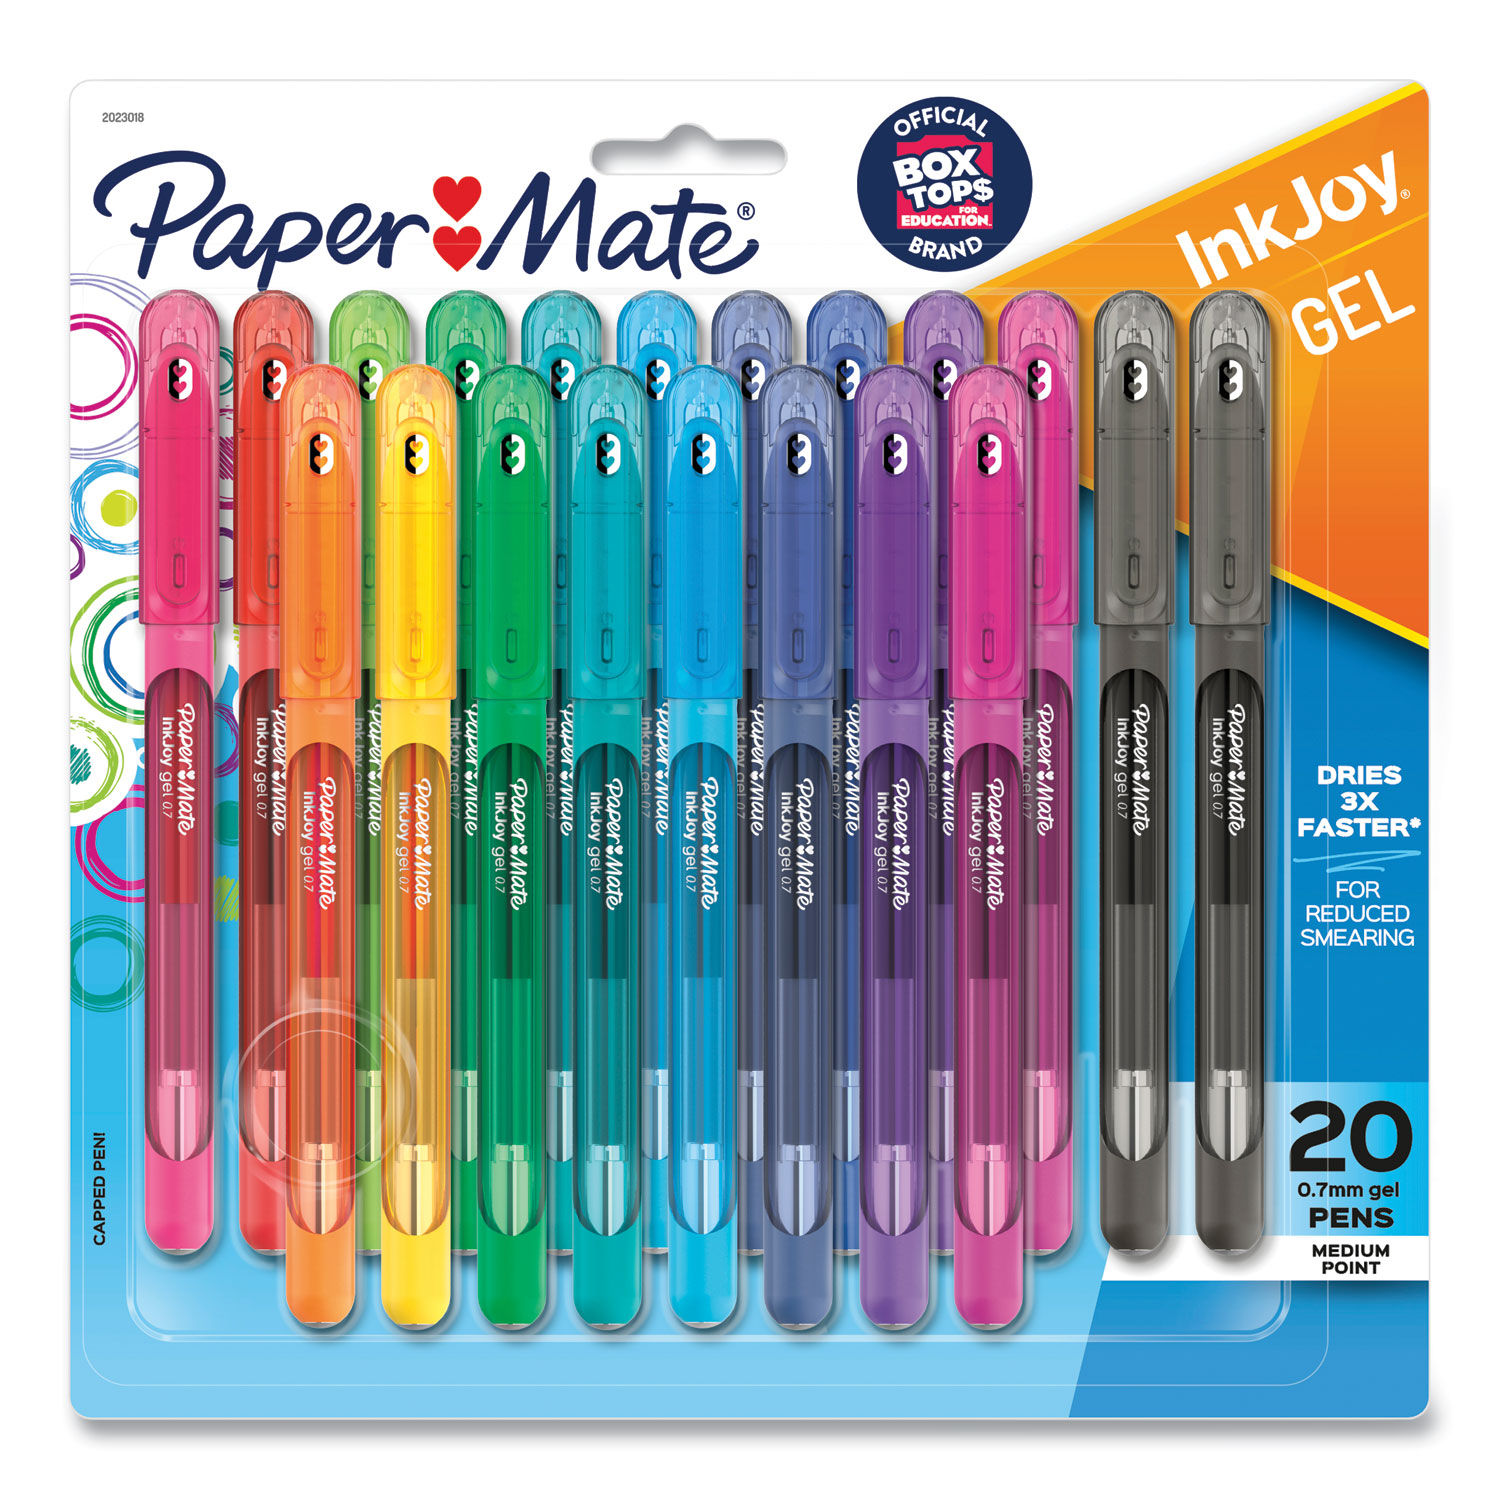 InkJoy Gel Pen by Paper Mate® PAP2023018 | OnTimeSupplies.com